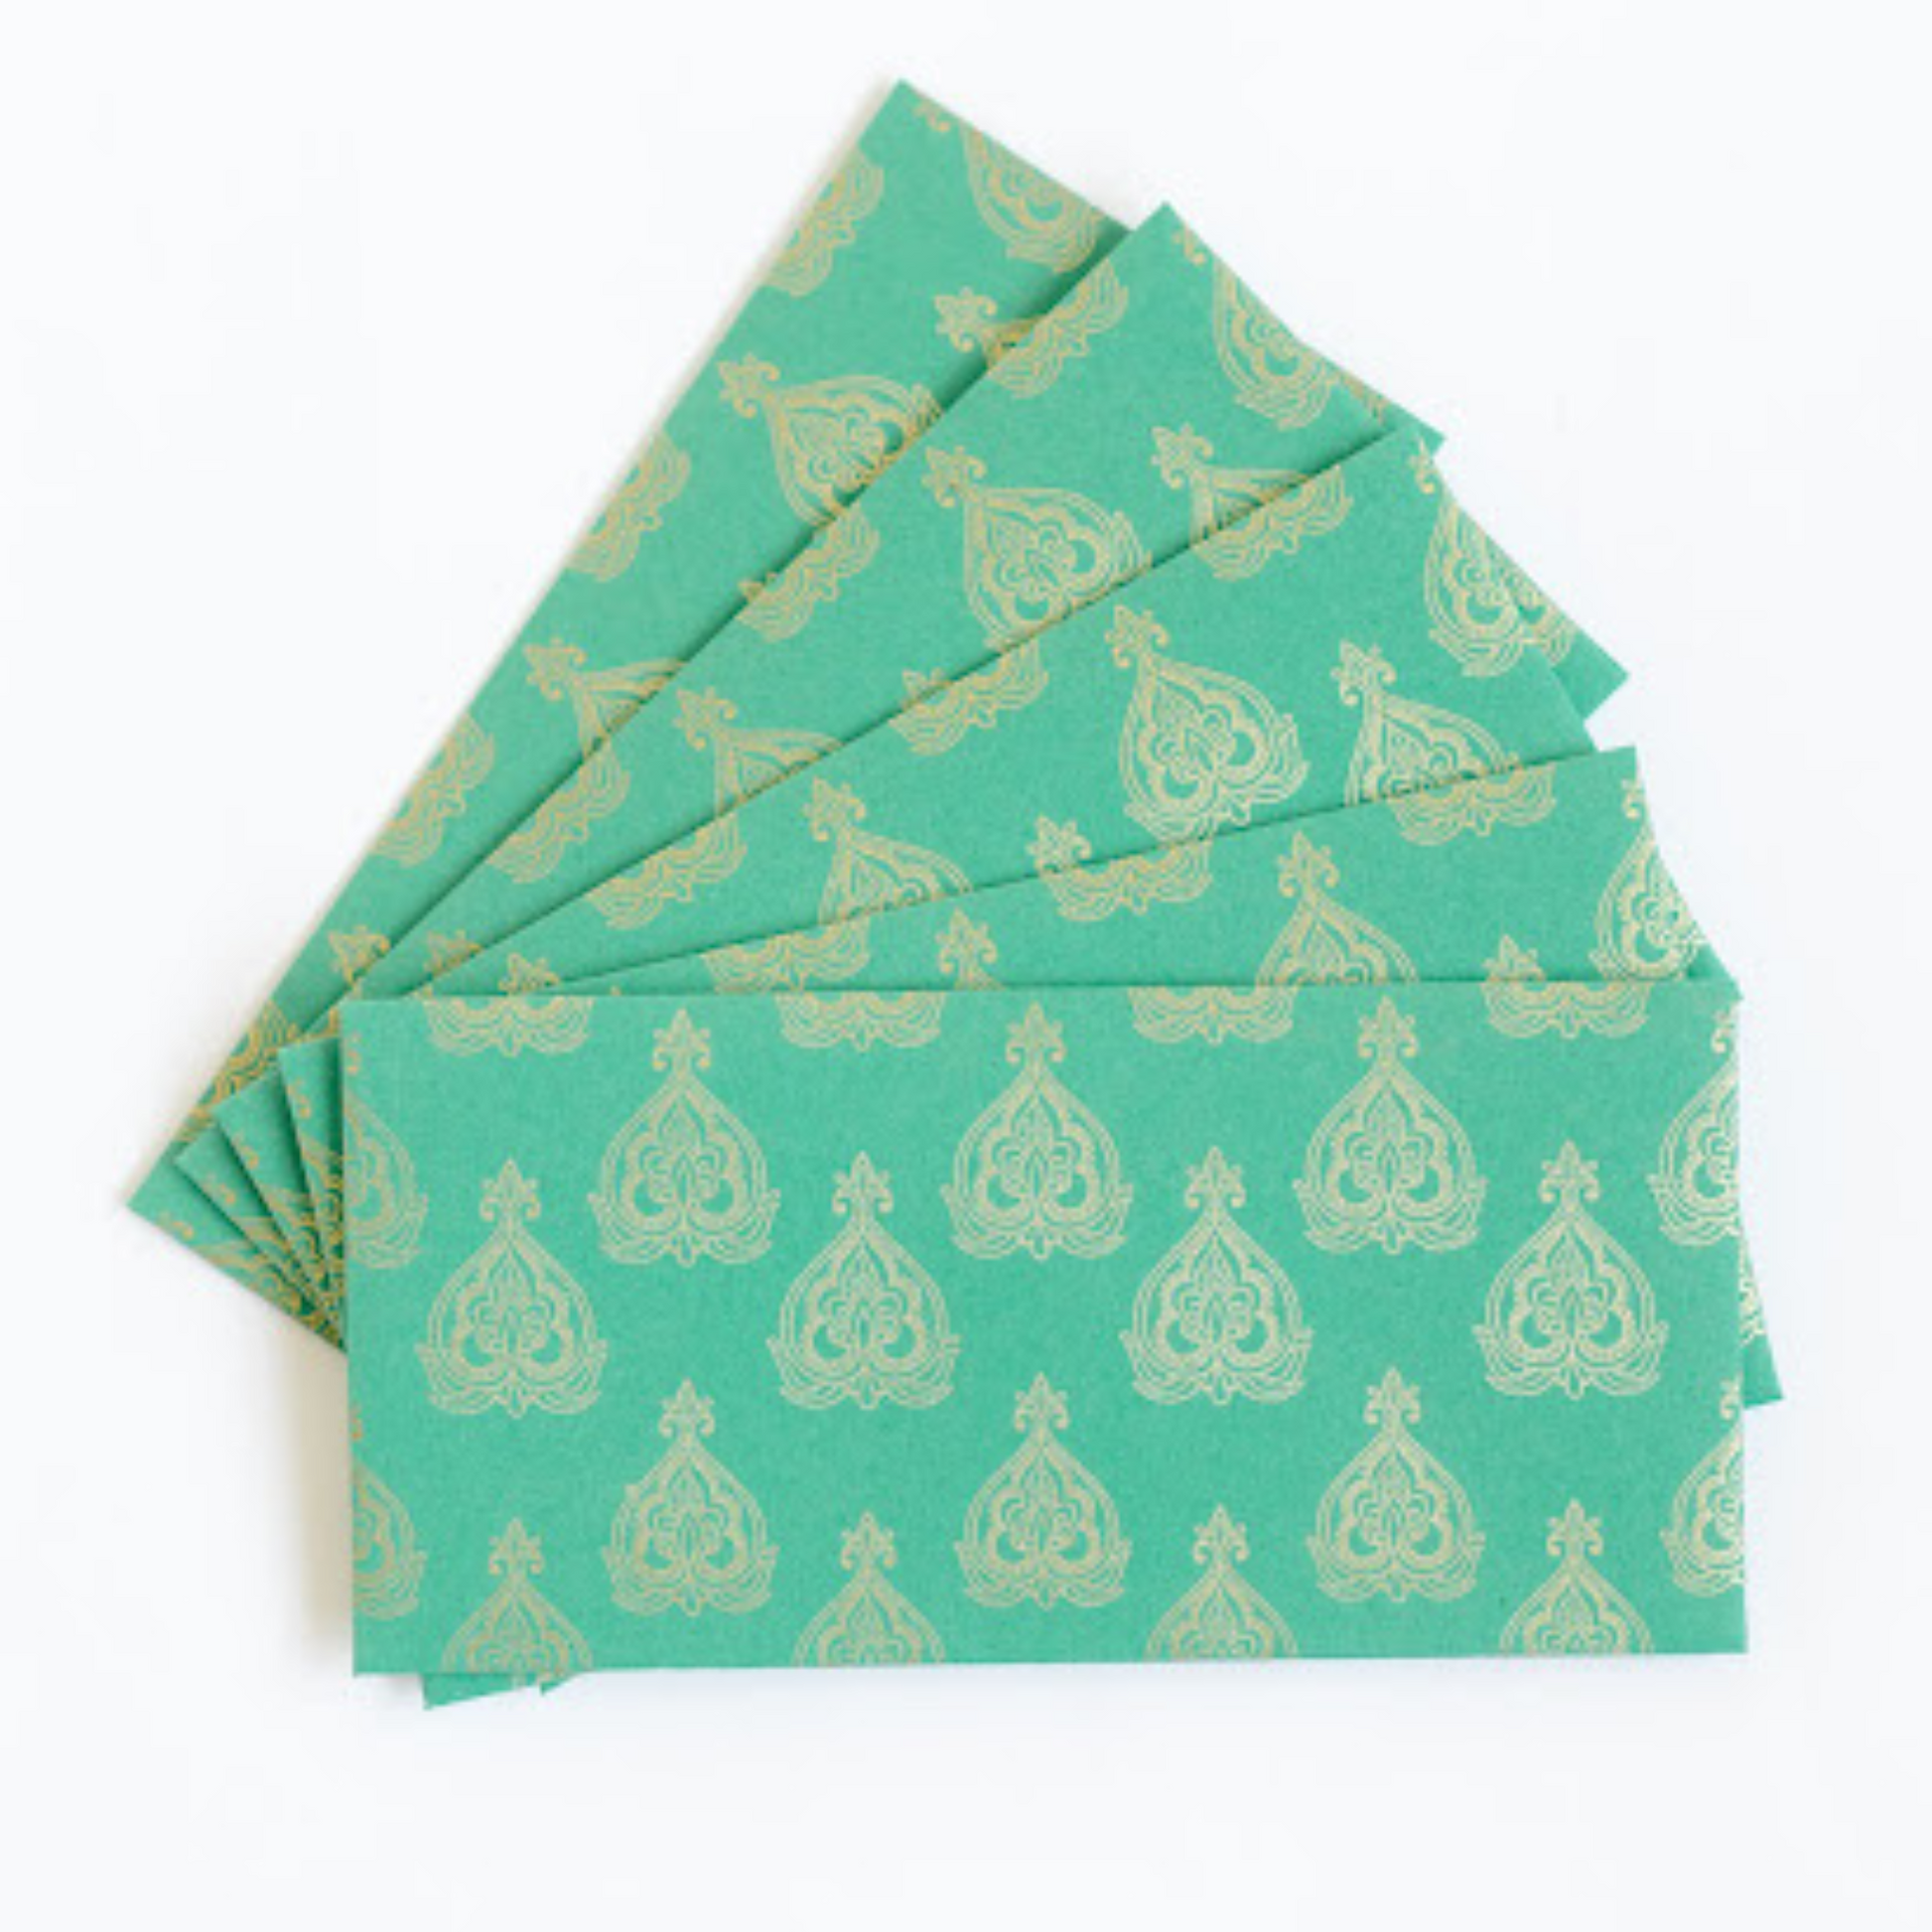 green and gold shugun wedding envelopes